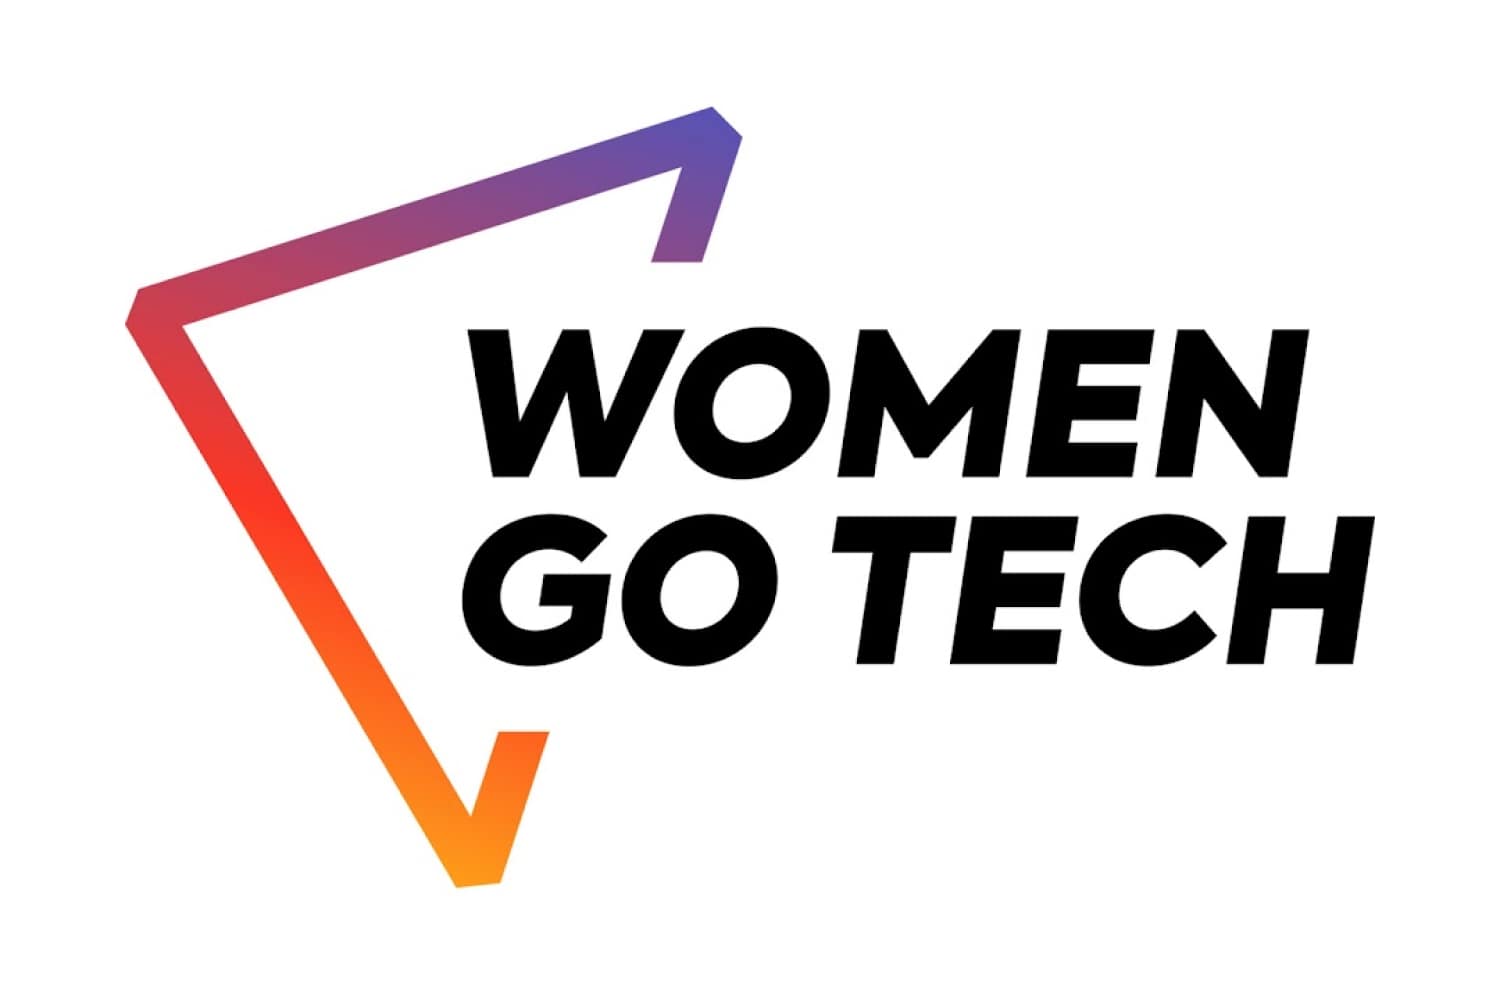 Women go tech logo